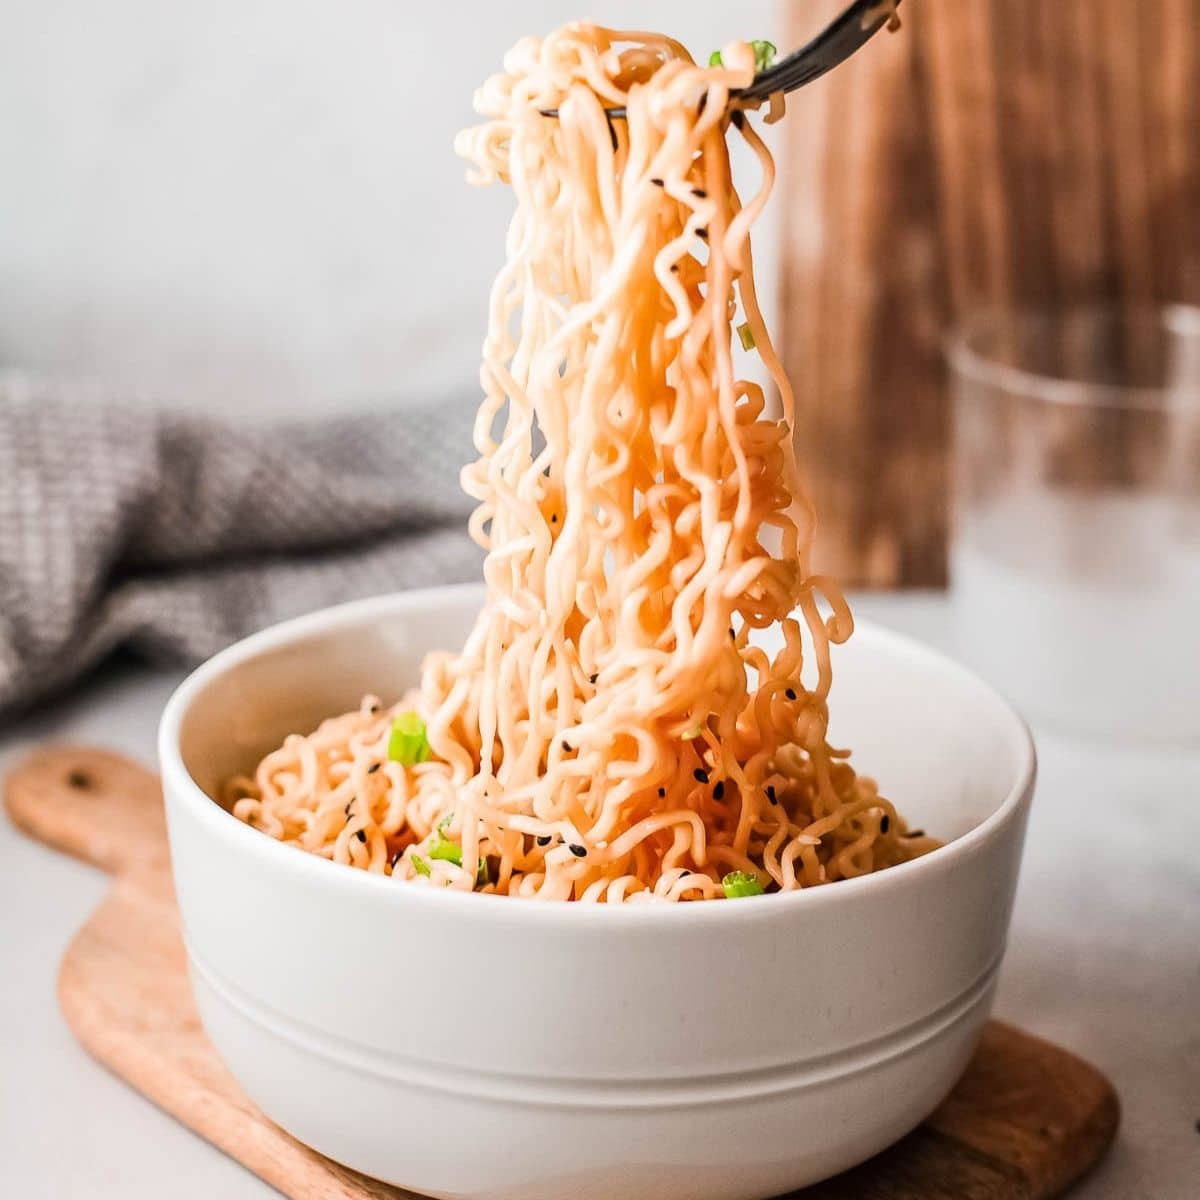 Are Samyang noodles healthy?